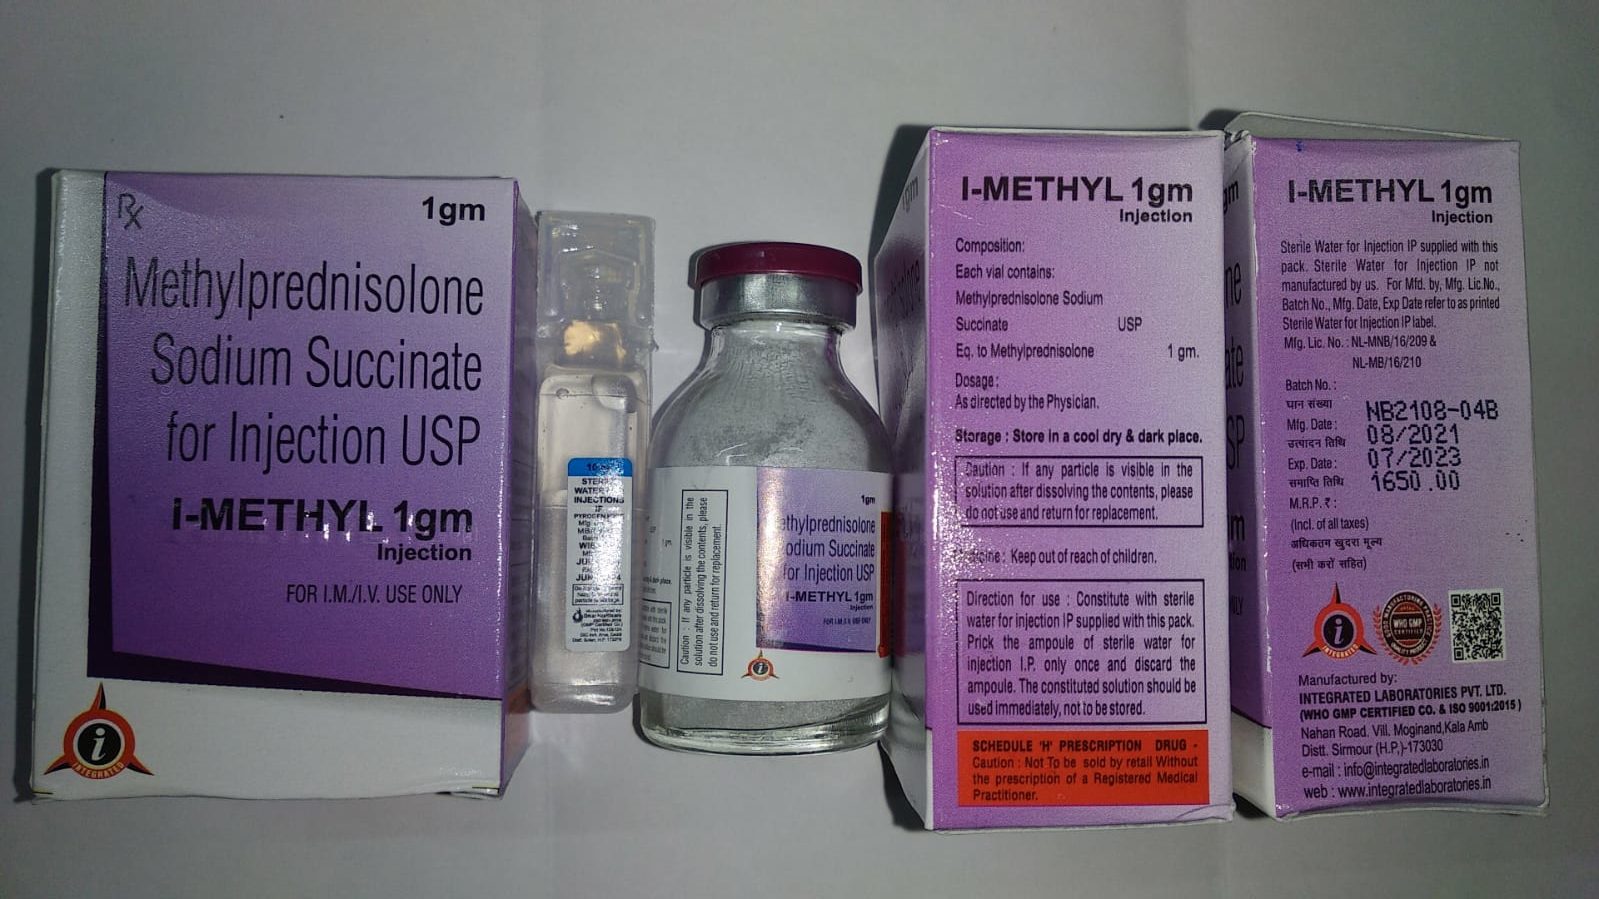 I-Methyl-1Gm - Methylprednisolone Sodium Succinate